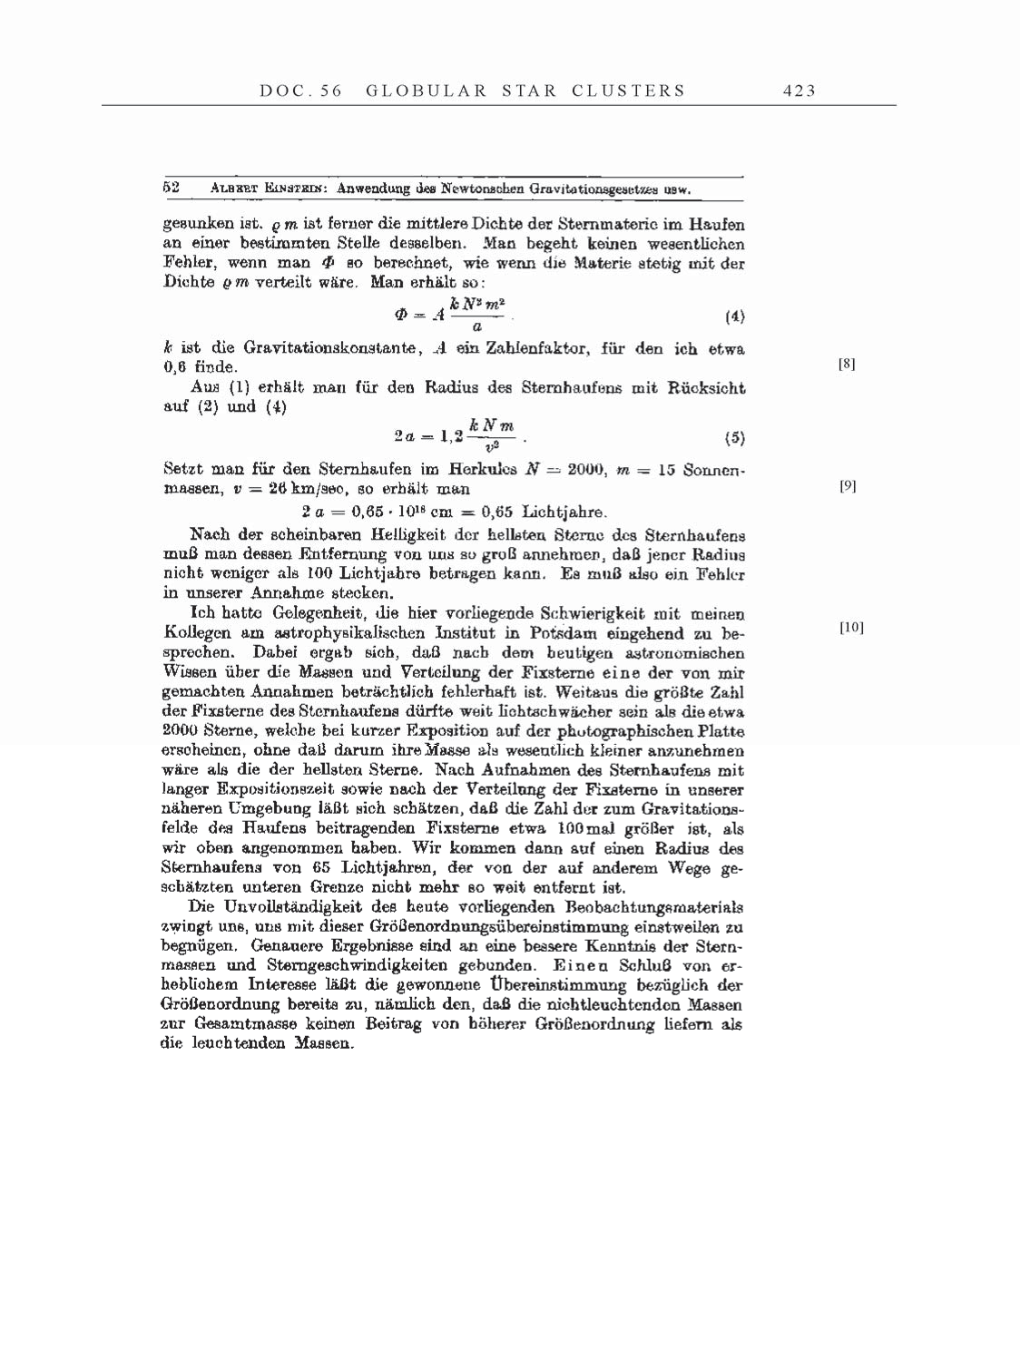 Volume 7: The Berlin Years: Writings, 1918-1921 page 423